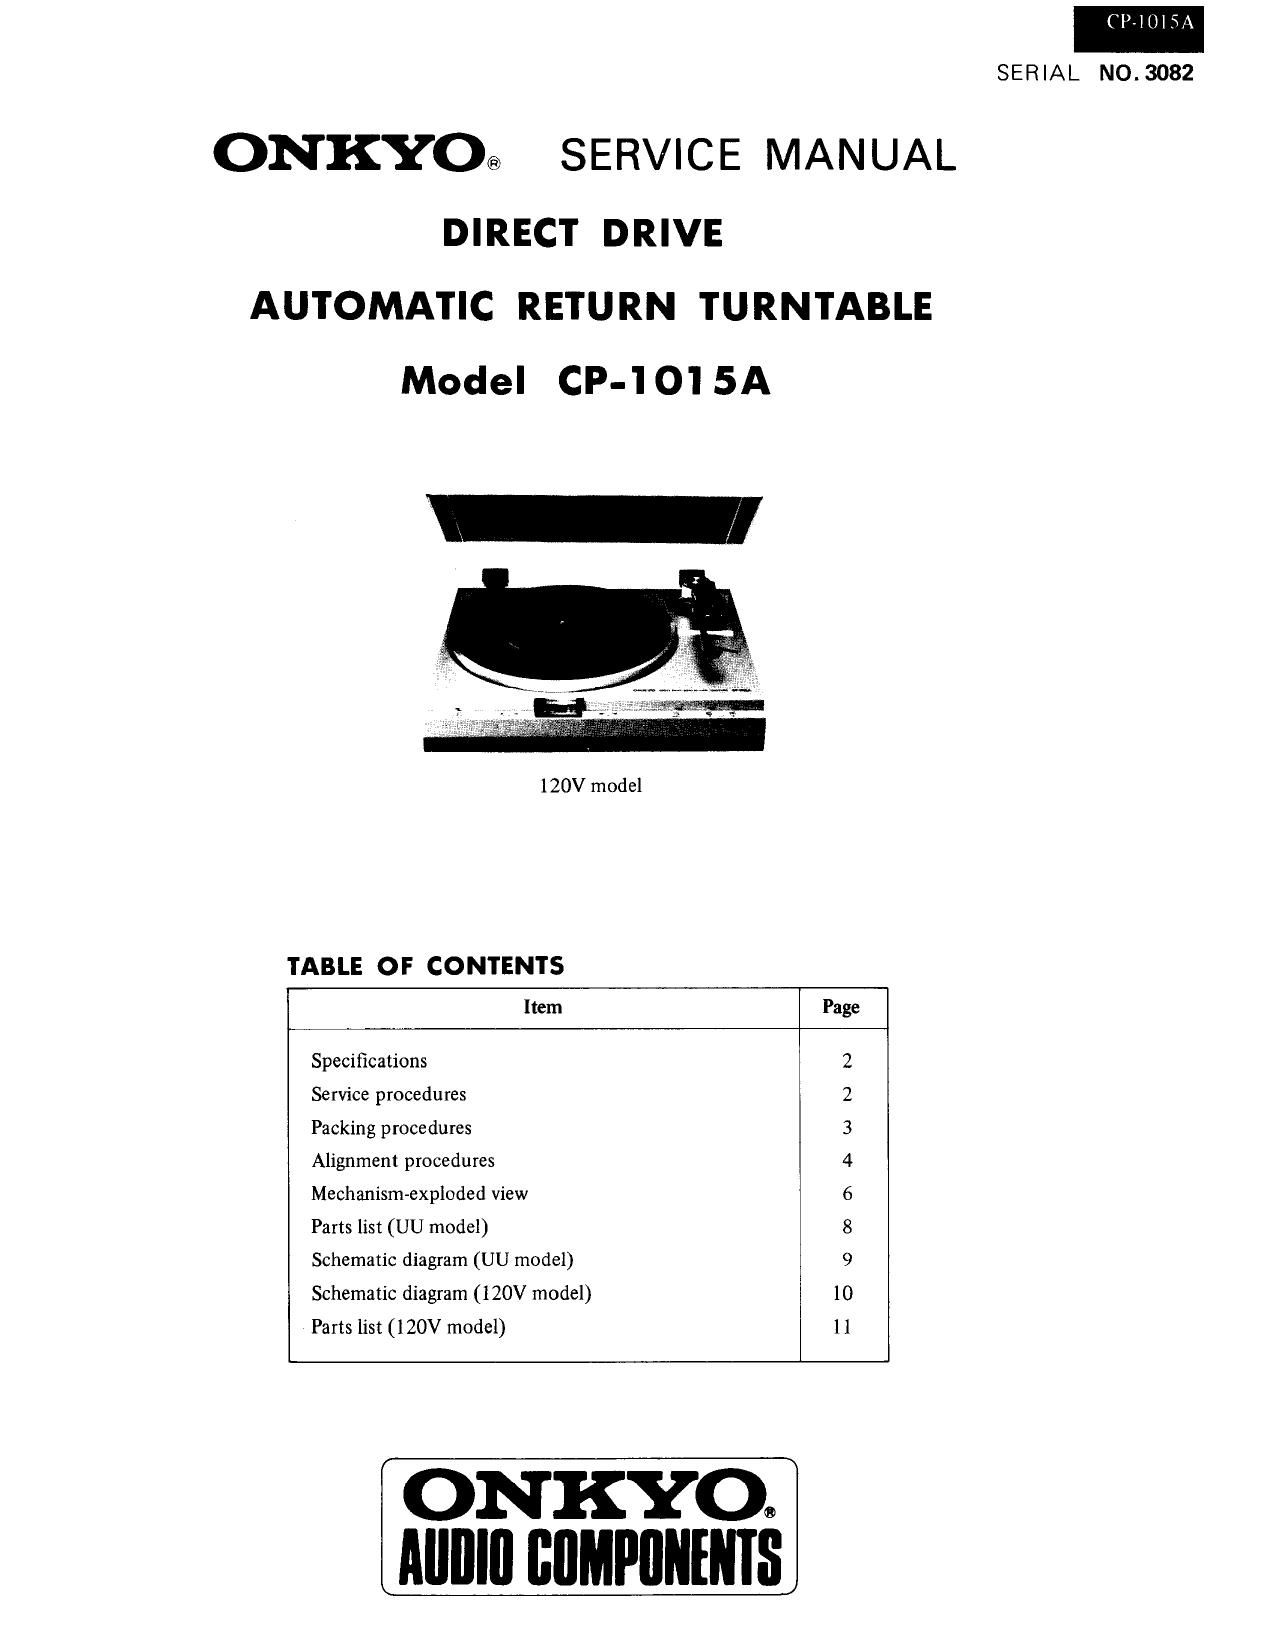 Onkyo CP 1015 A Service Manual